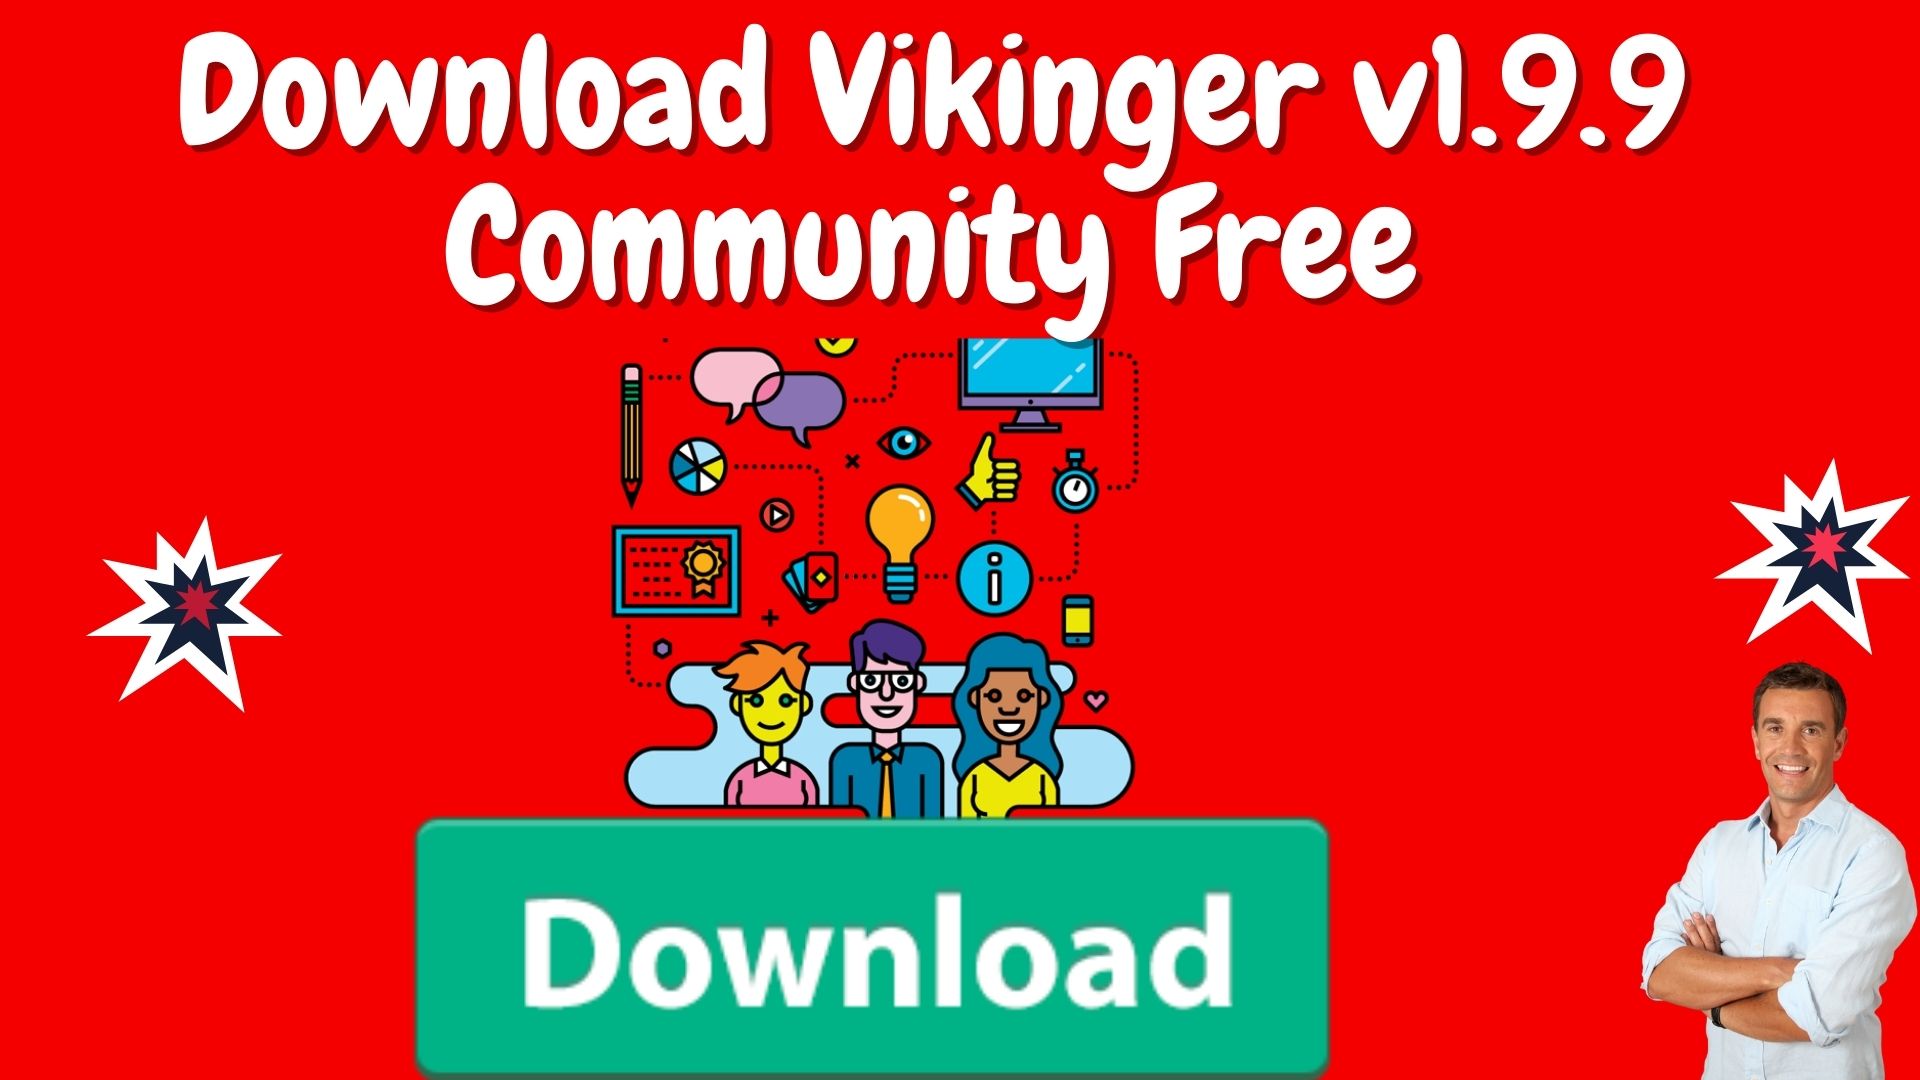 Download Vikinger V1.9.9 Community Free